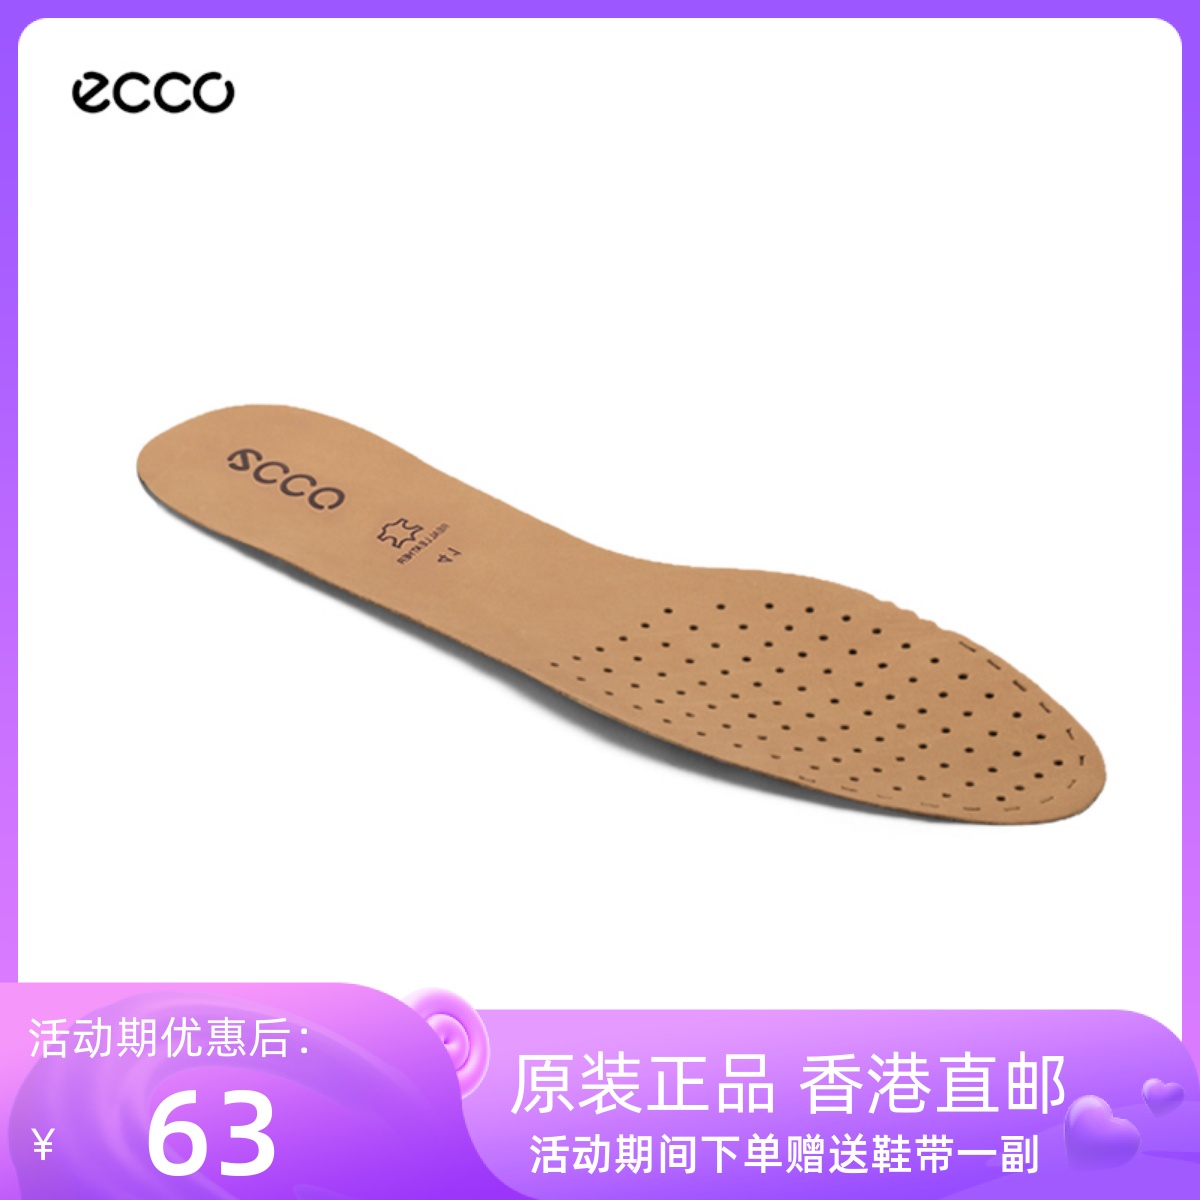 ECCO爱步鞋垫正品头层牛皮薄款舒适透气防臭软底商务皮鞋鞋垫男女